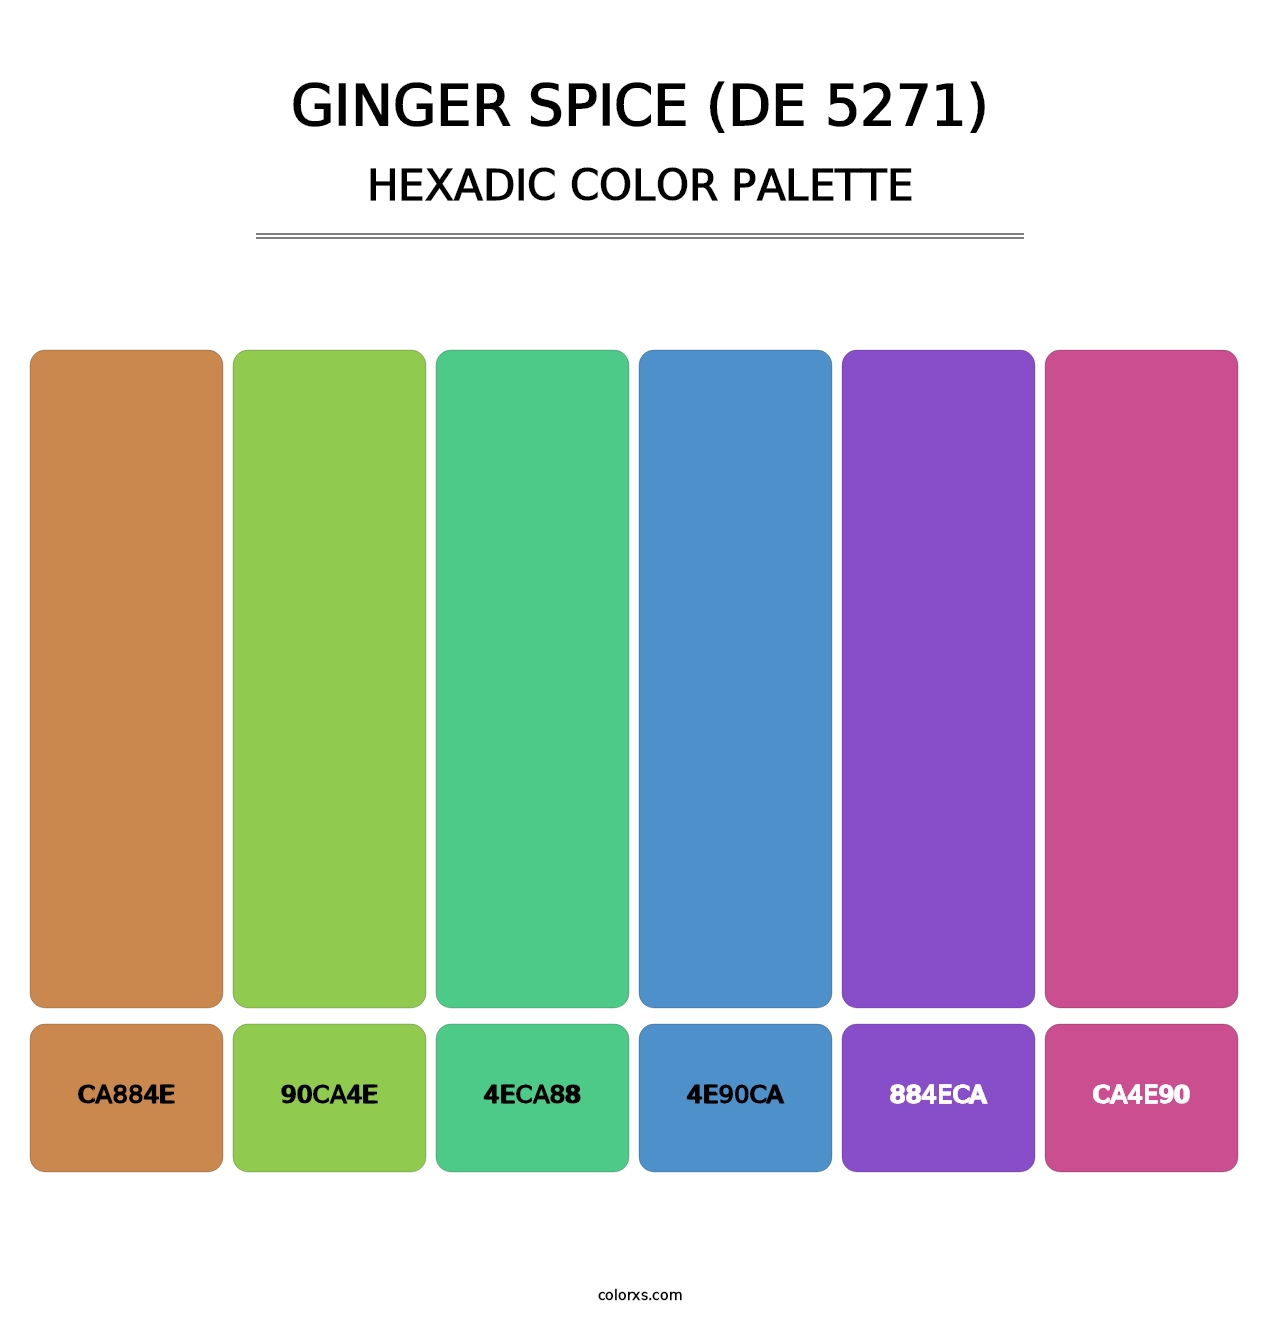 Ginger Spice (DE 5271) - Hexadic Color Palette